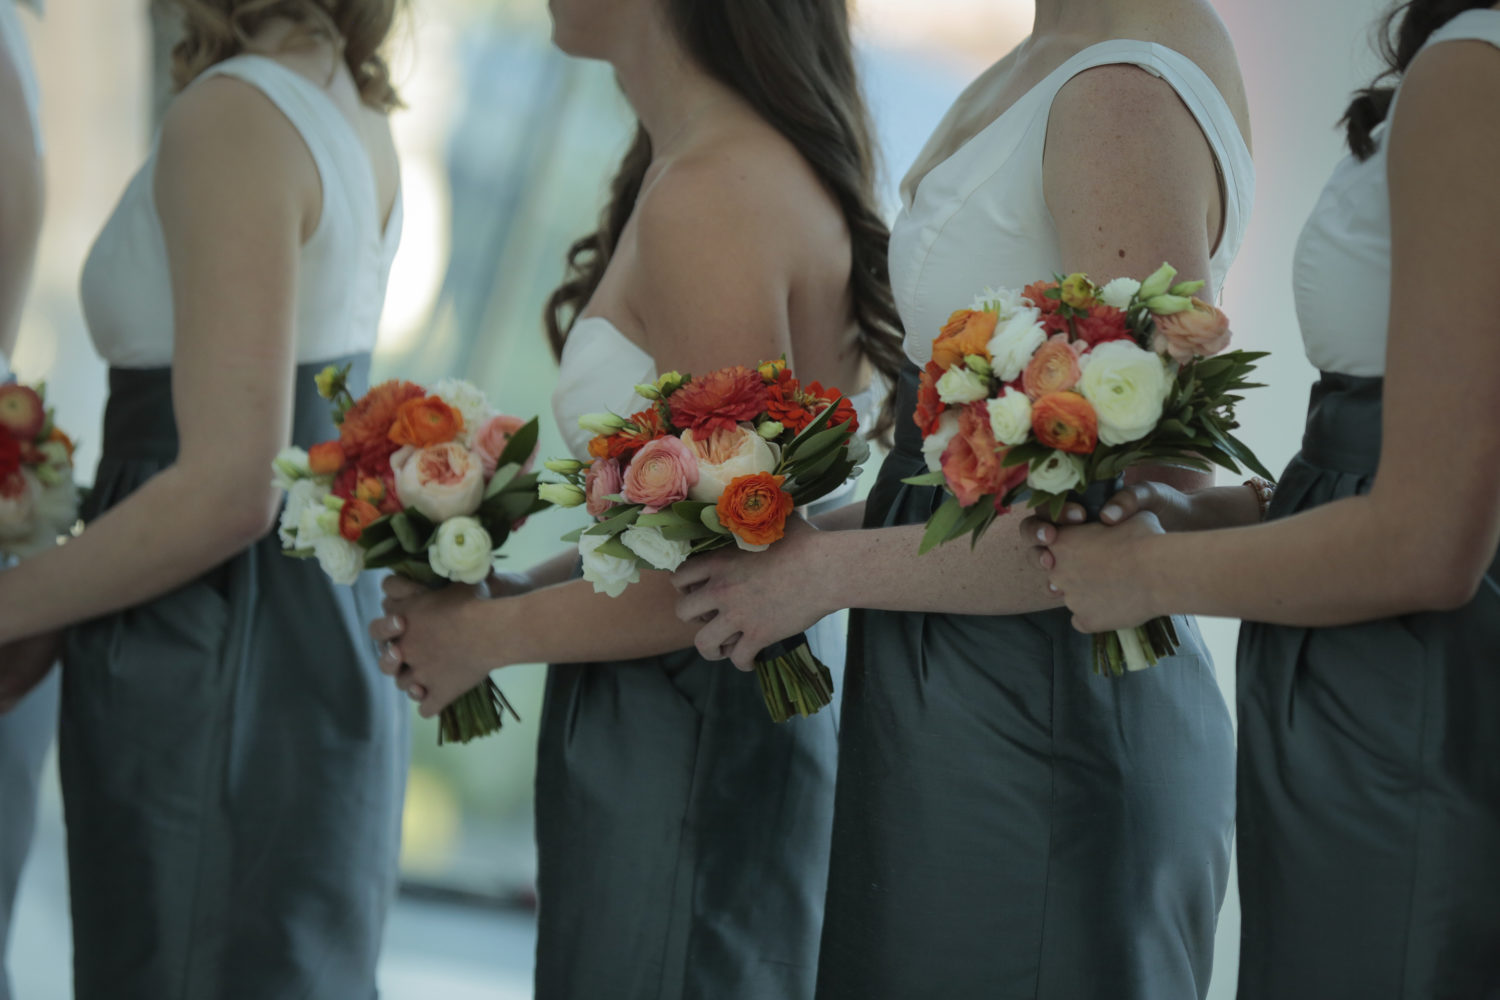 Bridesmaid's bouquets